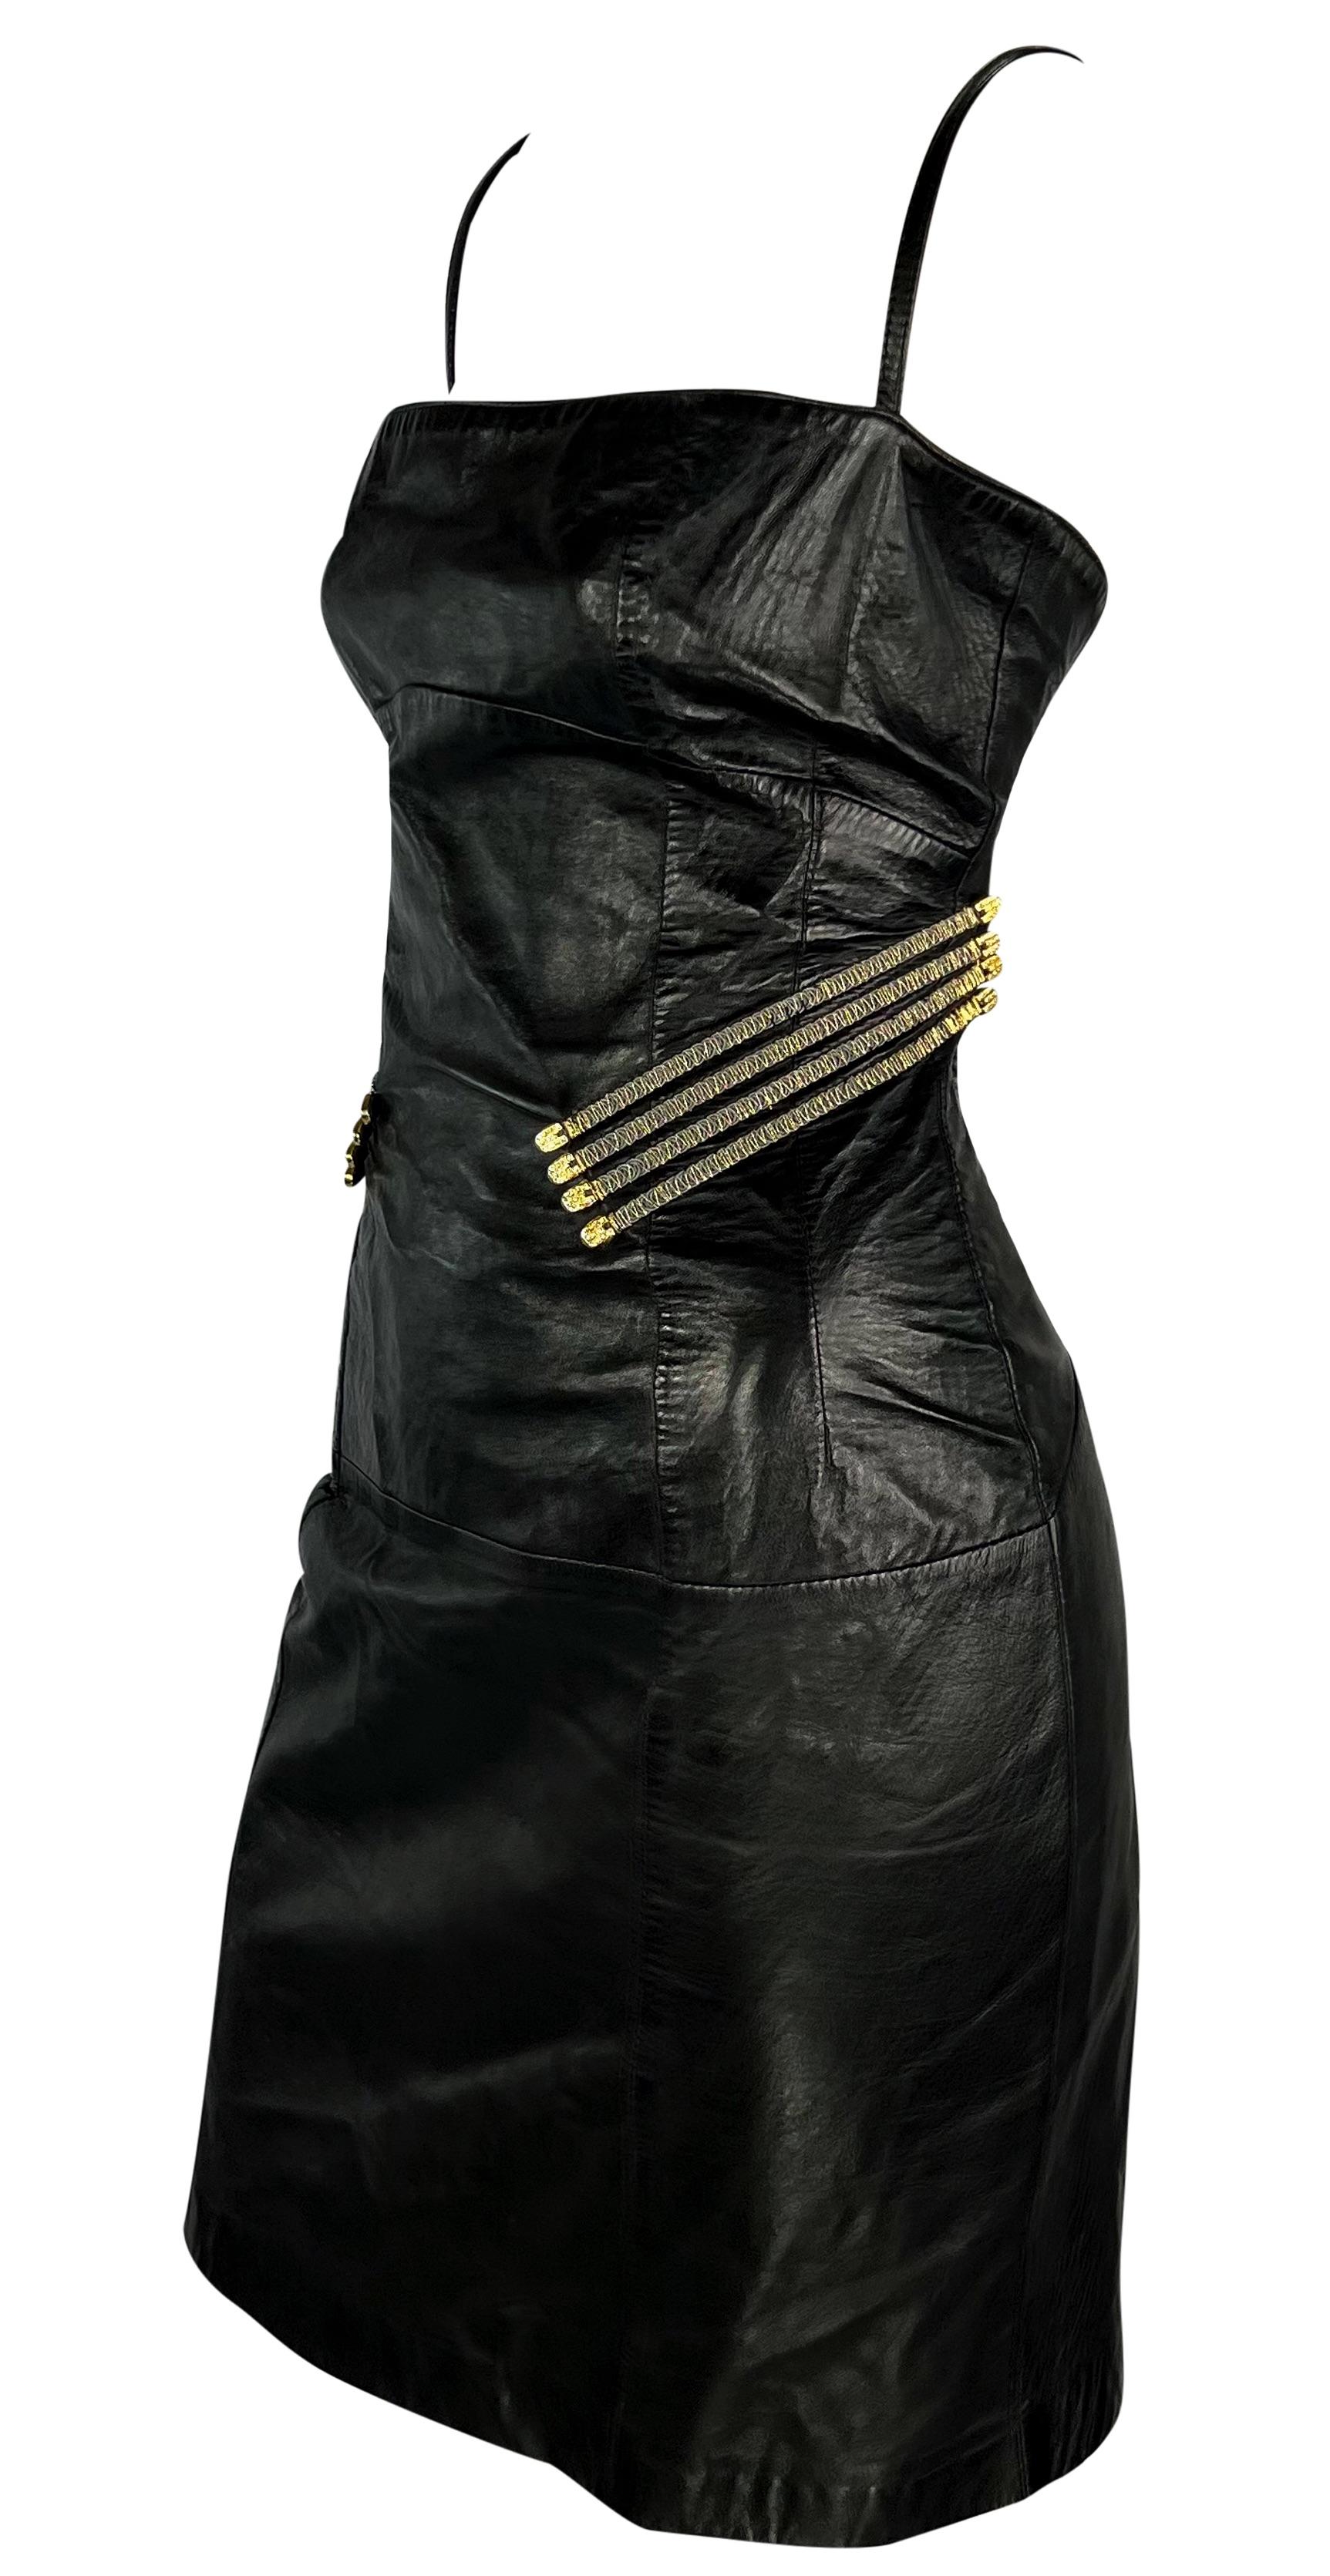 Women's S/S 1995 Gianfranco Ferré Rhinestone Gold Corset Boned Black Leather Mini Dress For Sale